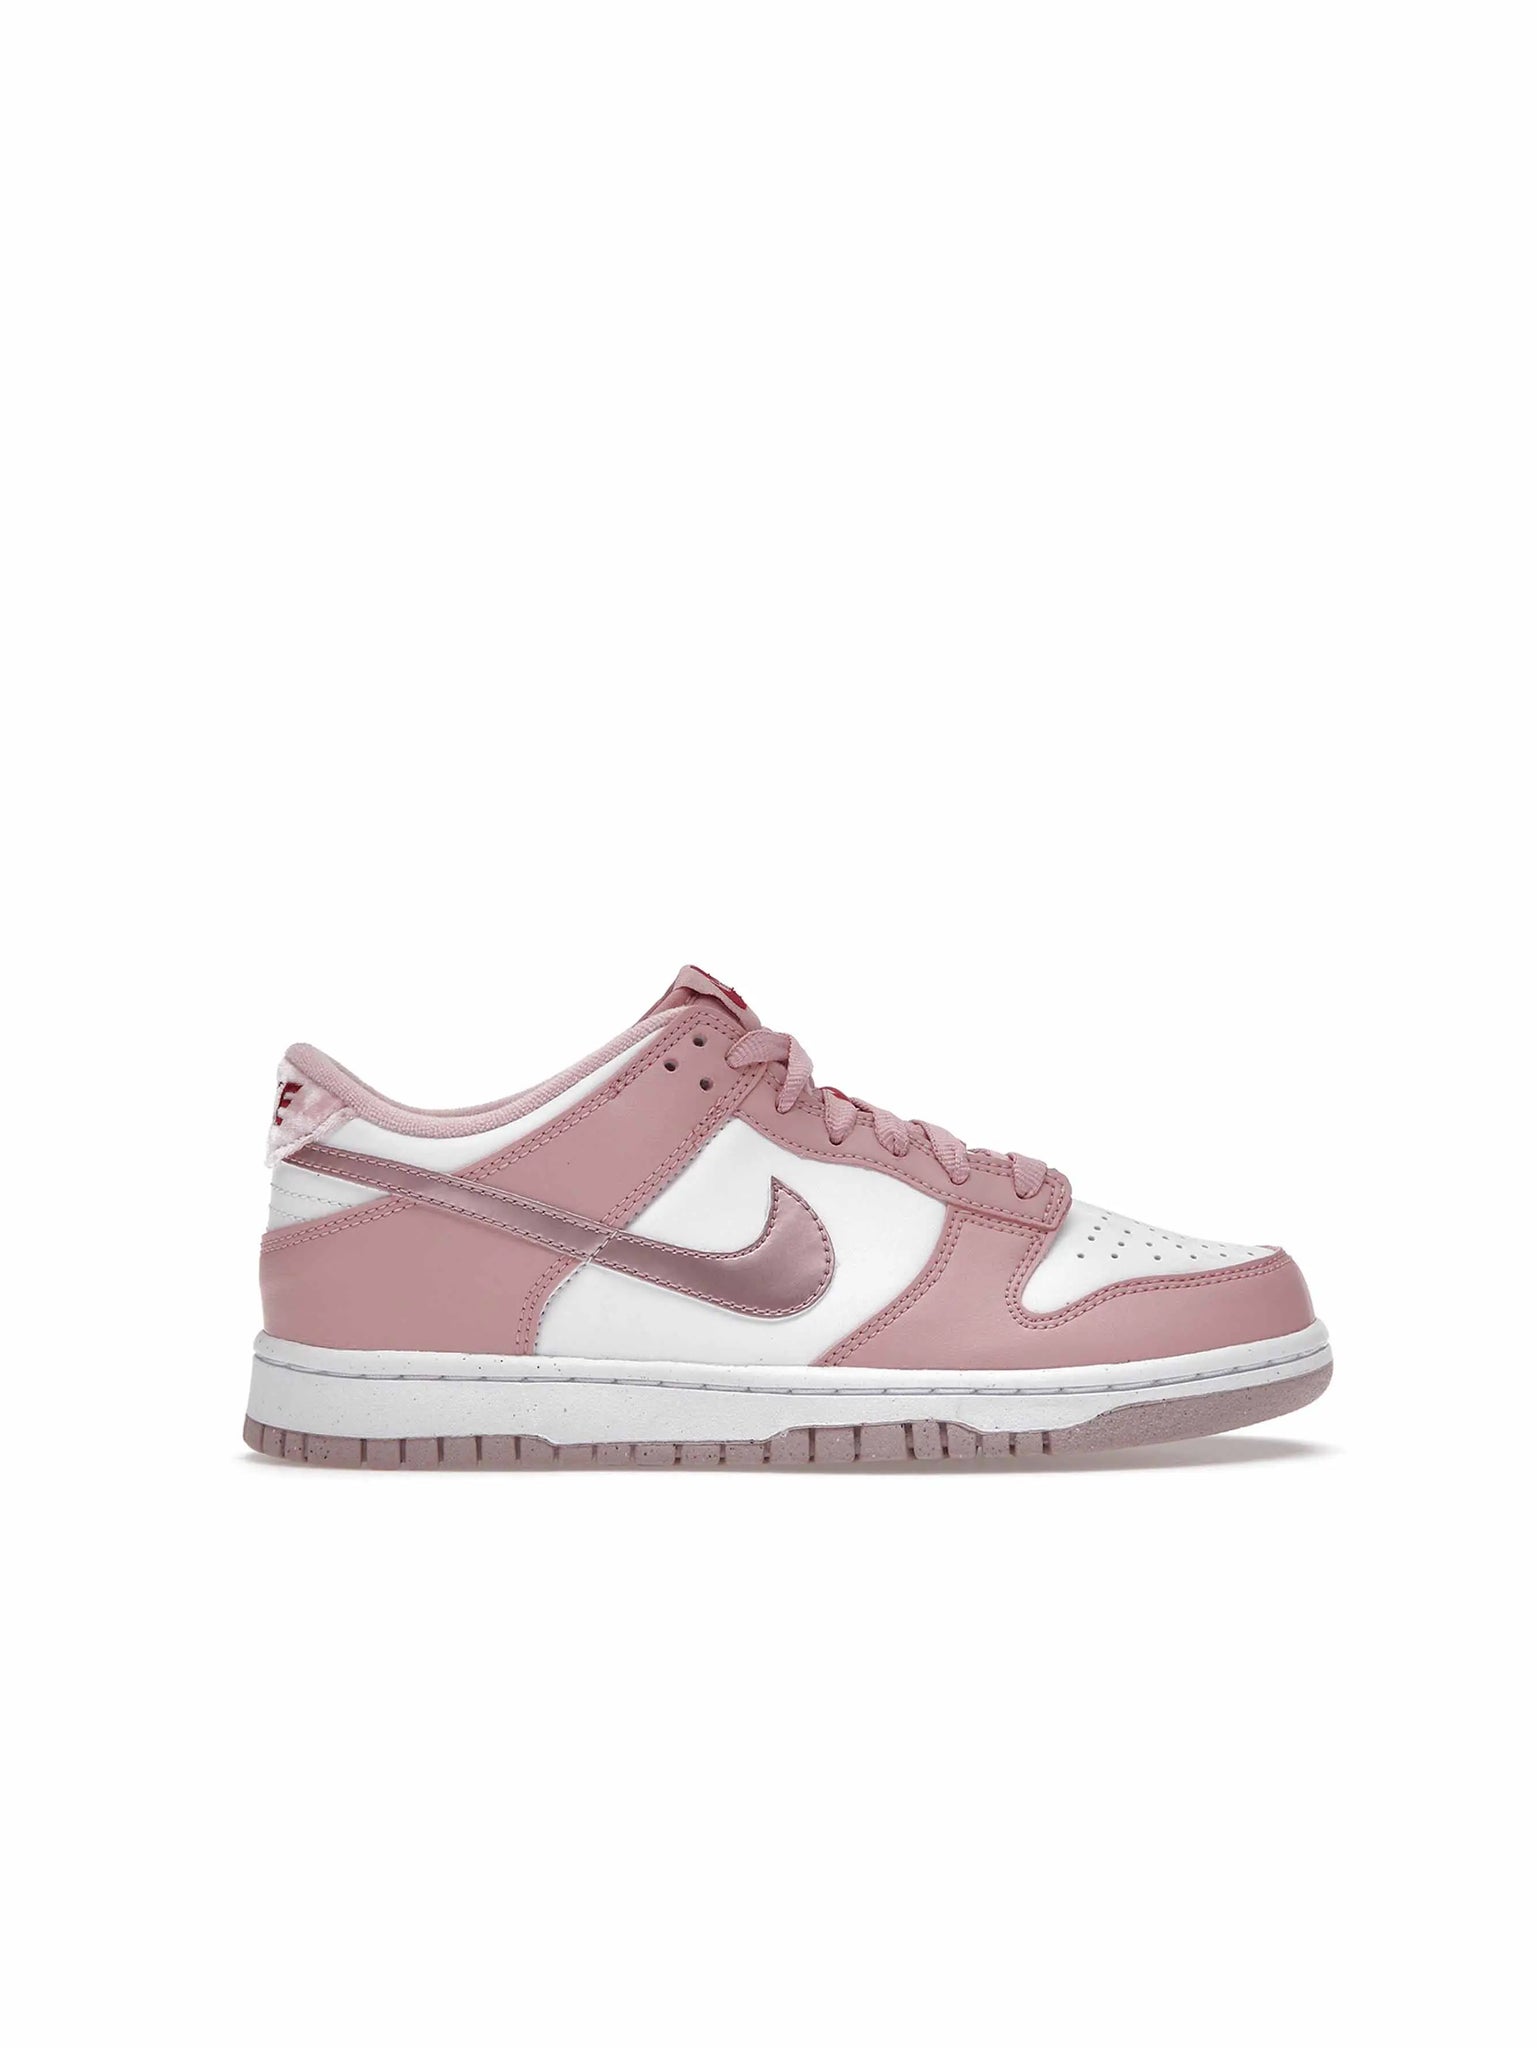 Nike Dunk Low Pink Velvet (GS) - Prior